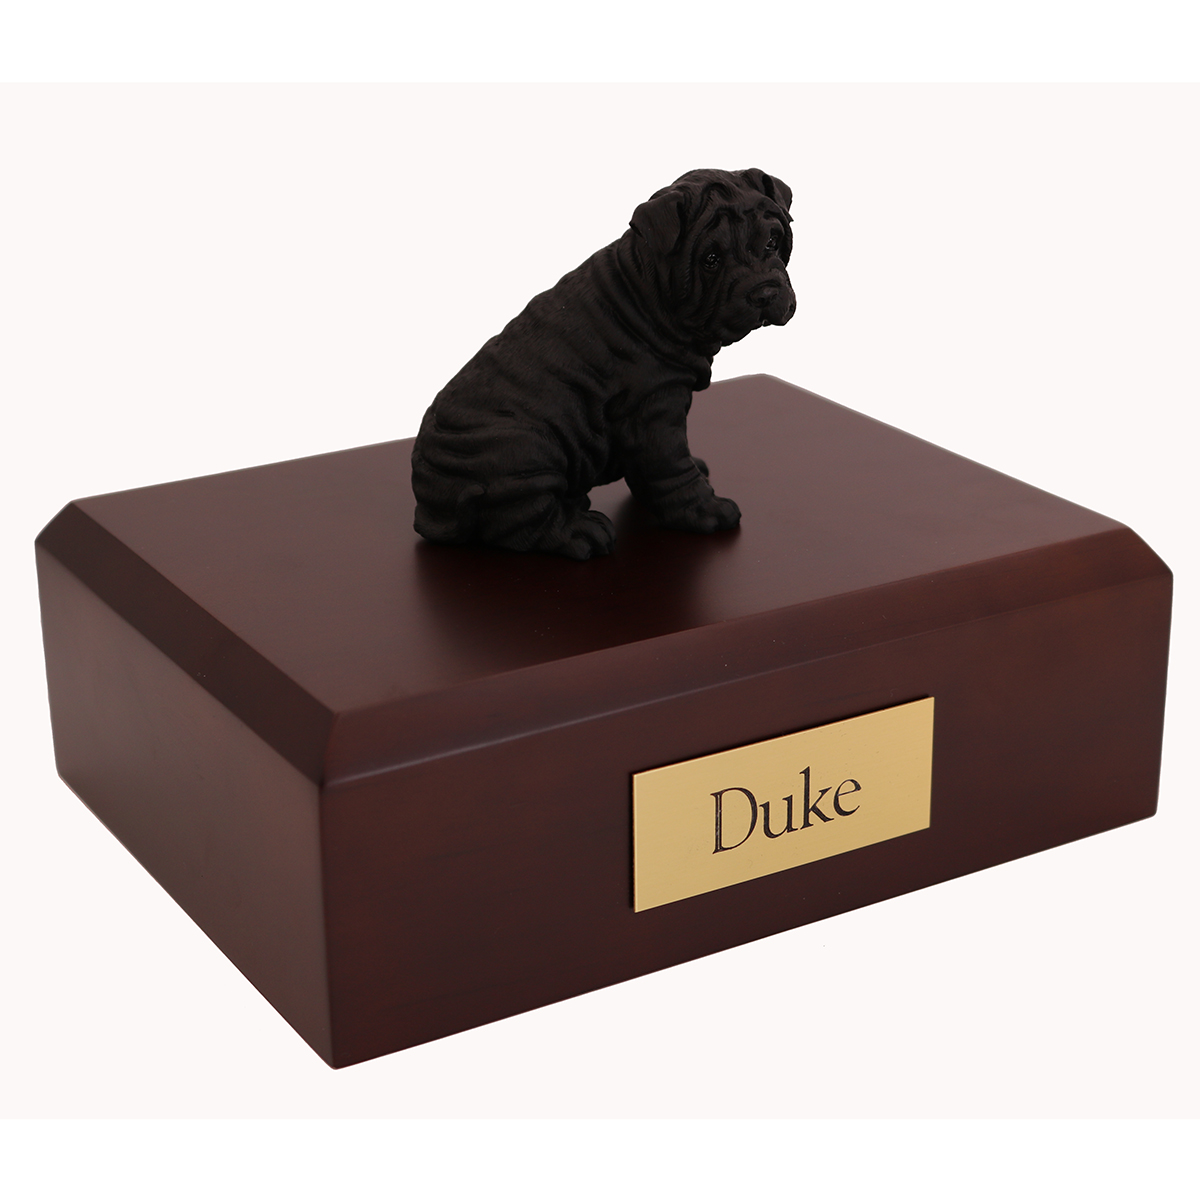 Dog, Shar Pei, Black - Figurine Urn